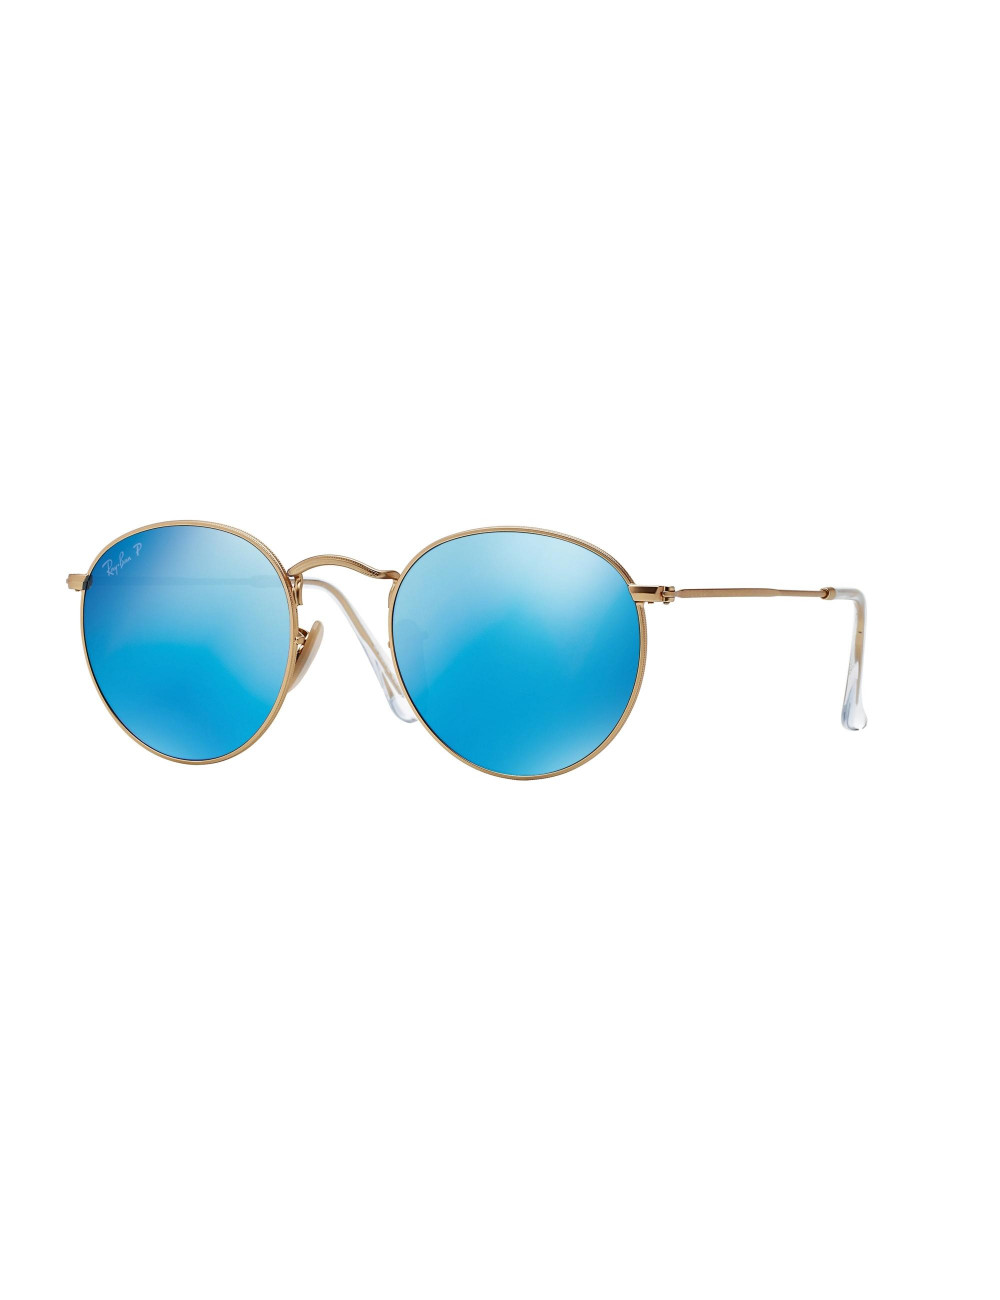 Ray Ban Round Metal 112/4L polarized sunglasses - Ottica